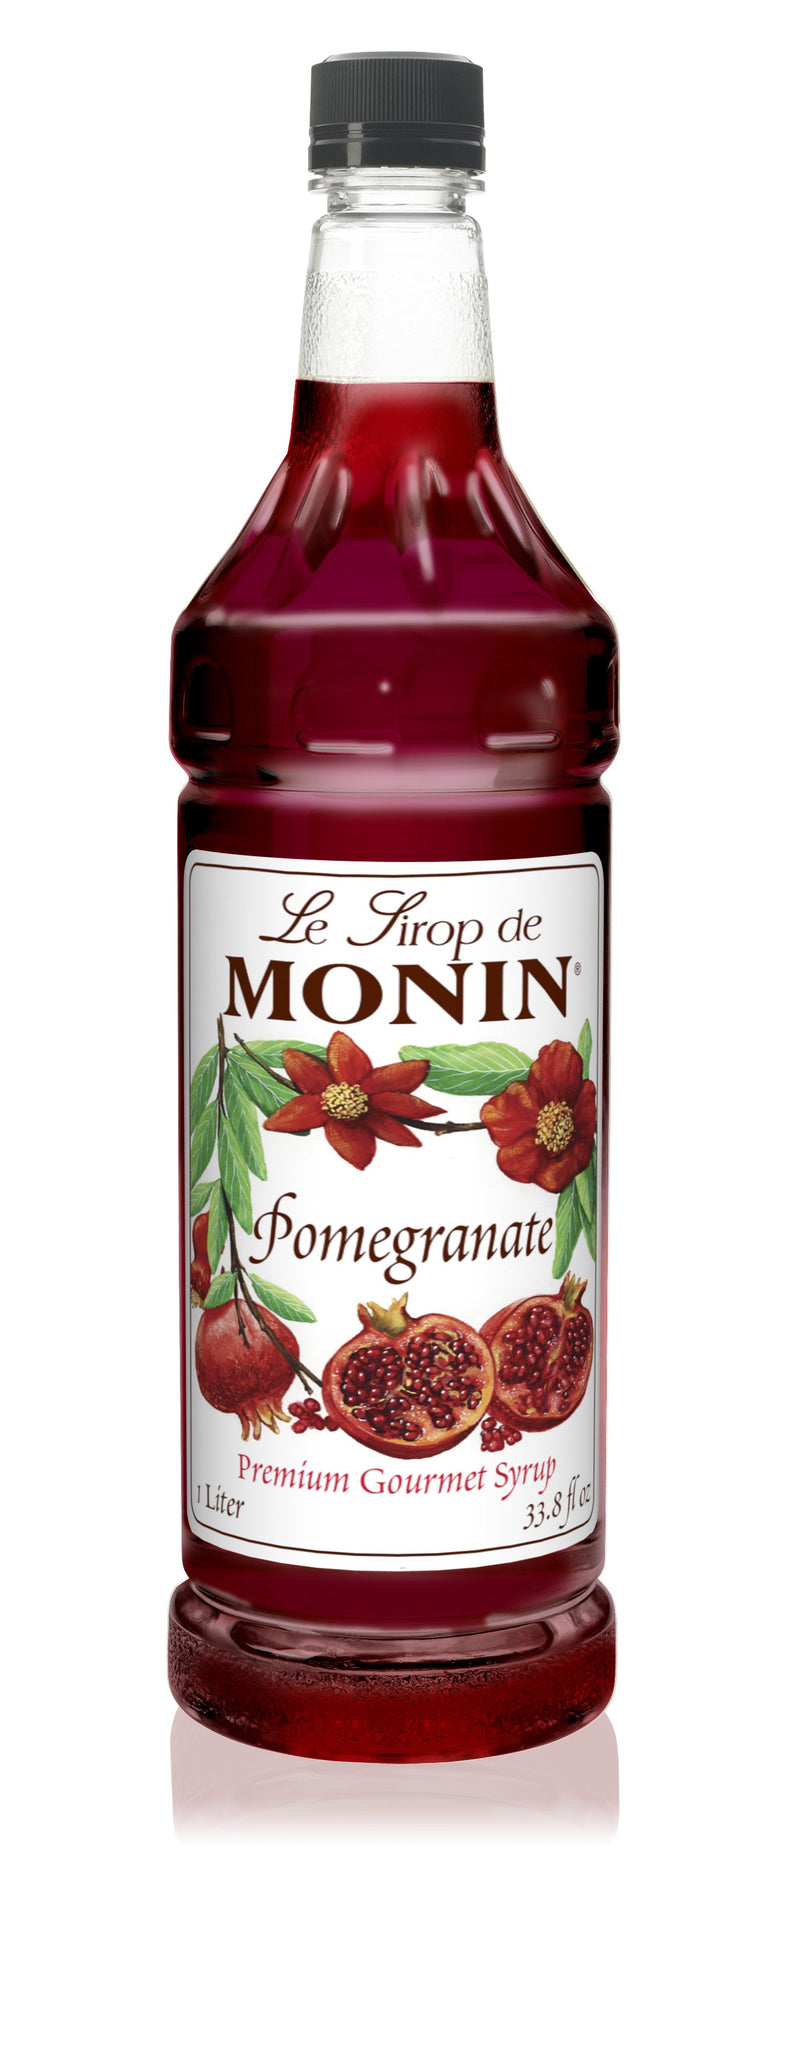 Monin Gluten Free, Vegan, Rich Red Pomegranate Fruit Syrup 1000ml